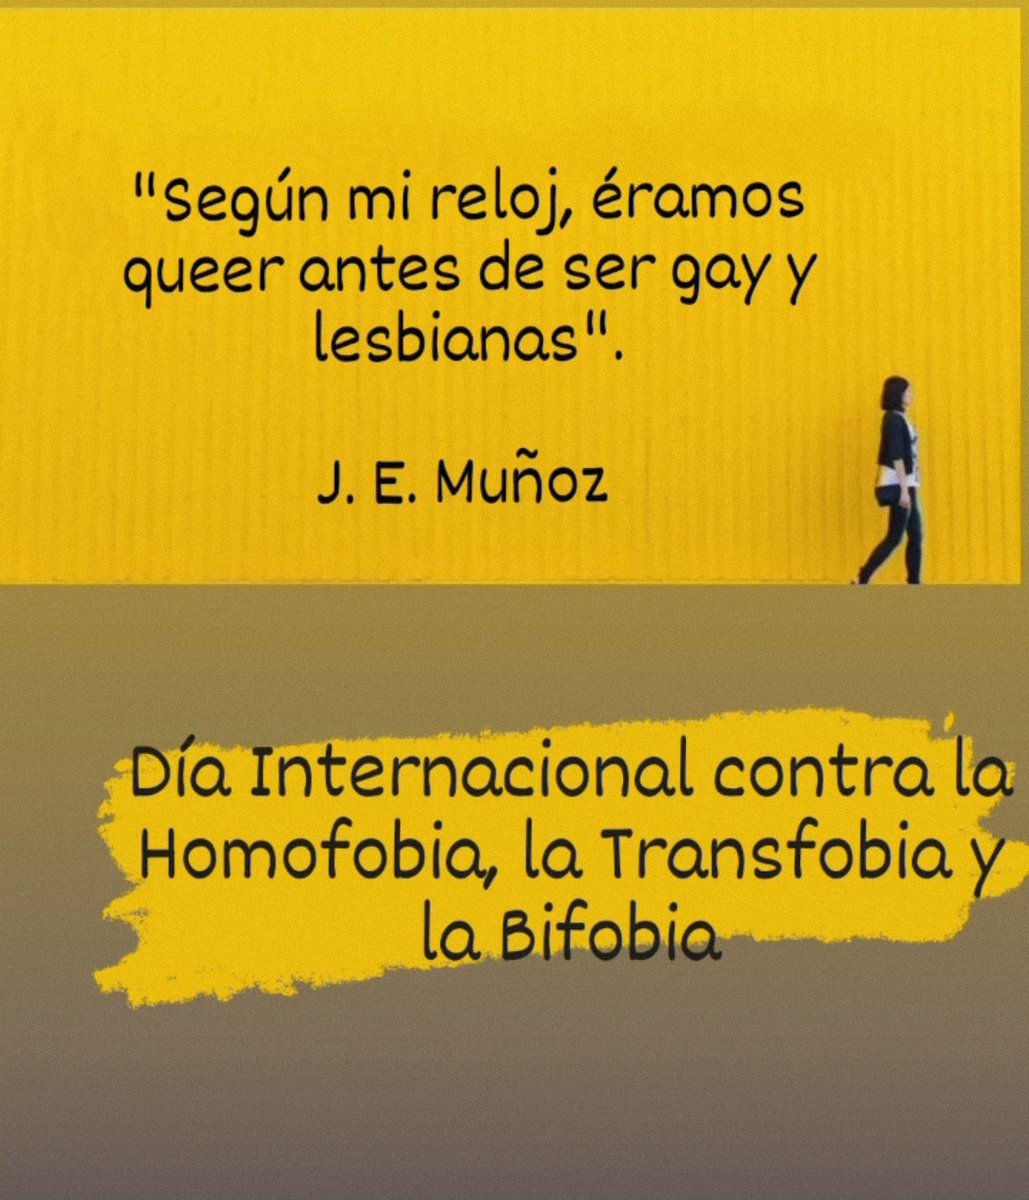 #17demayo 
#Queer 
#StopHomofobia